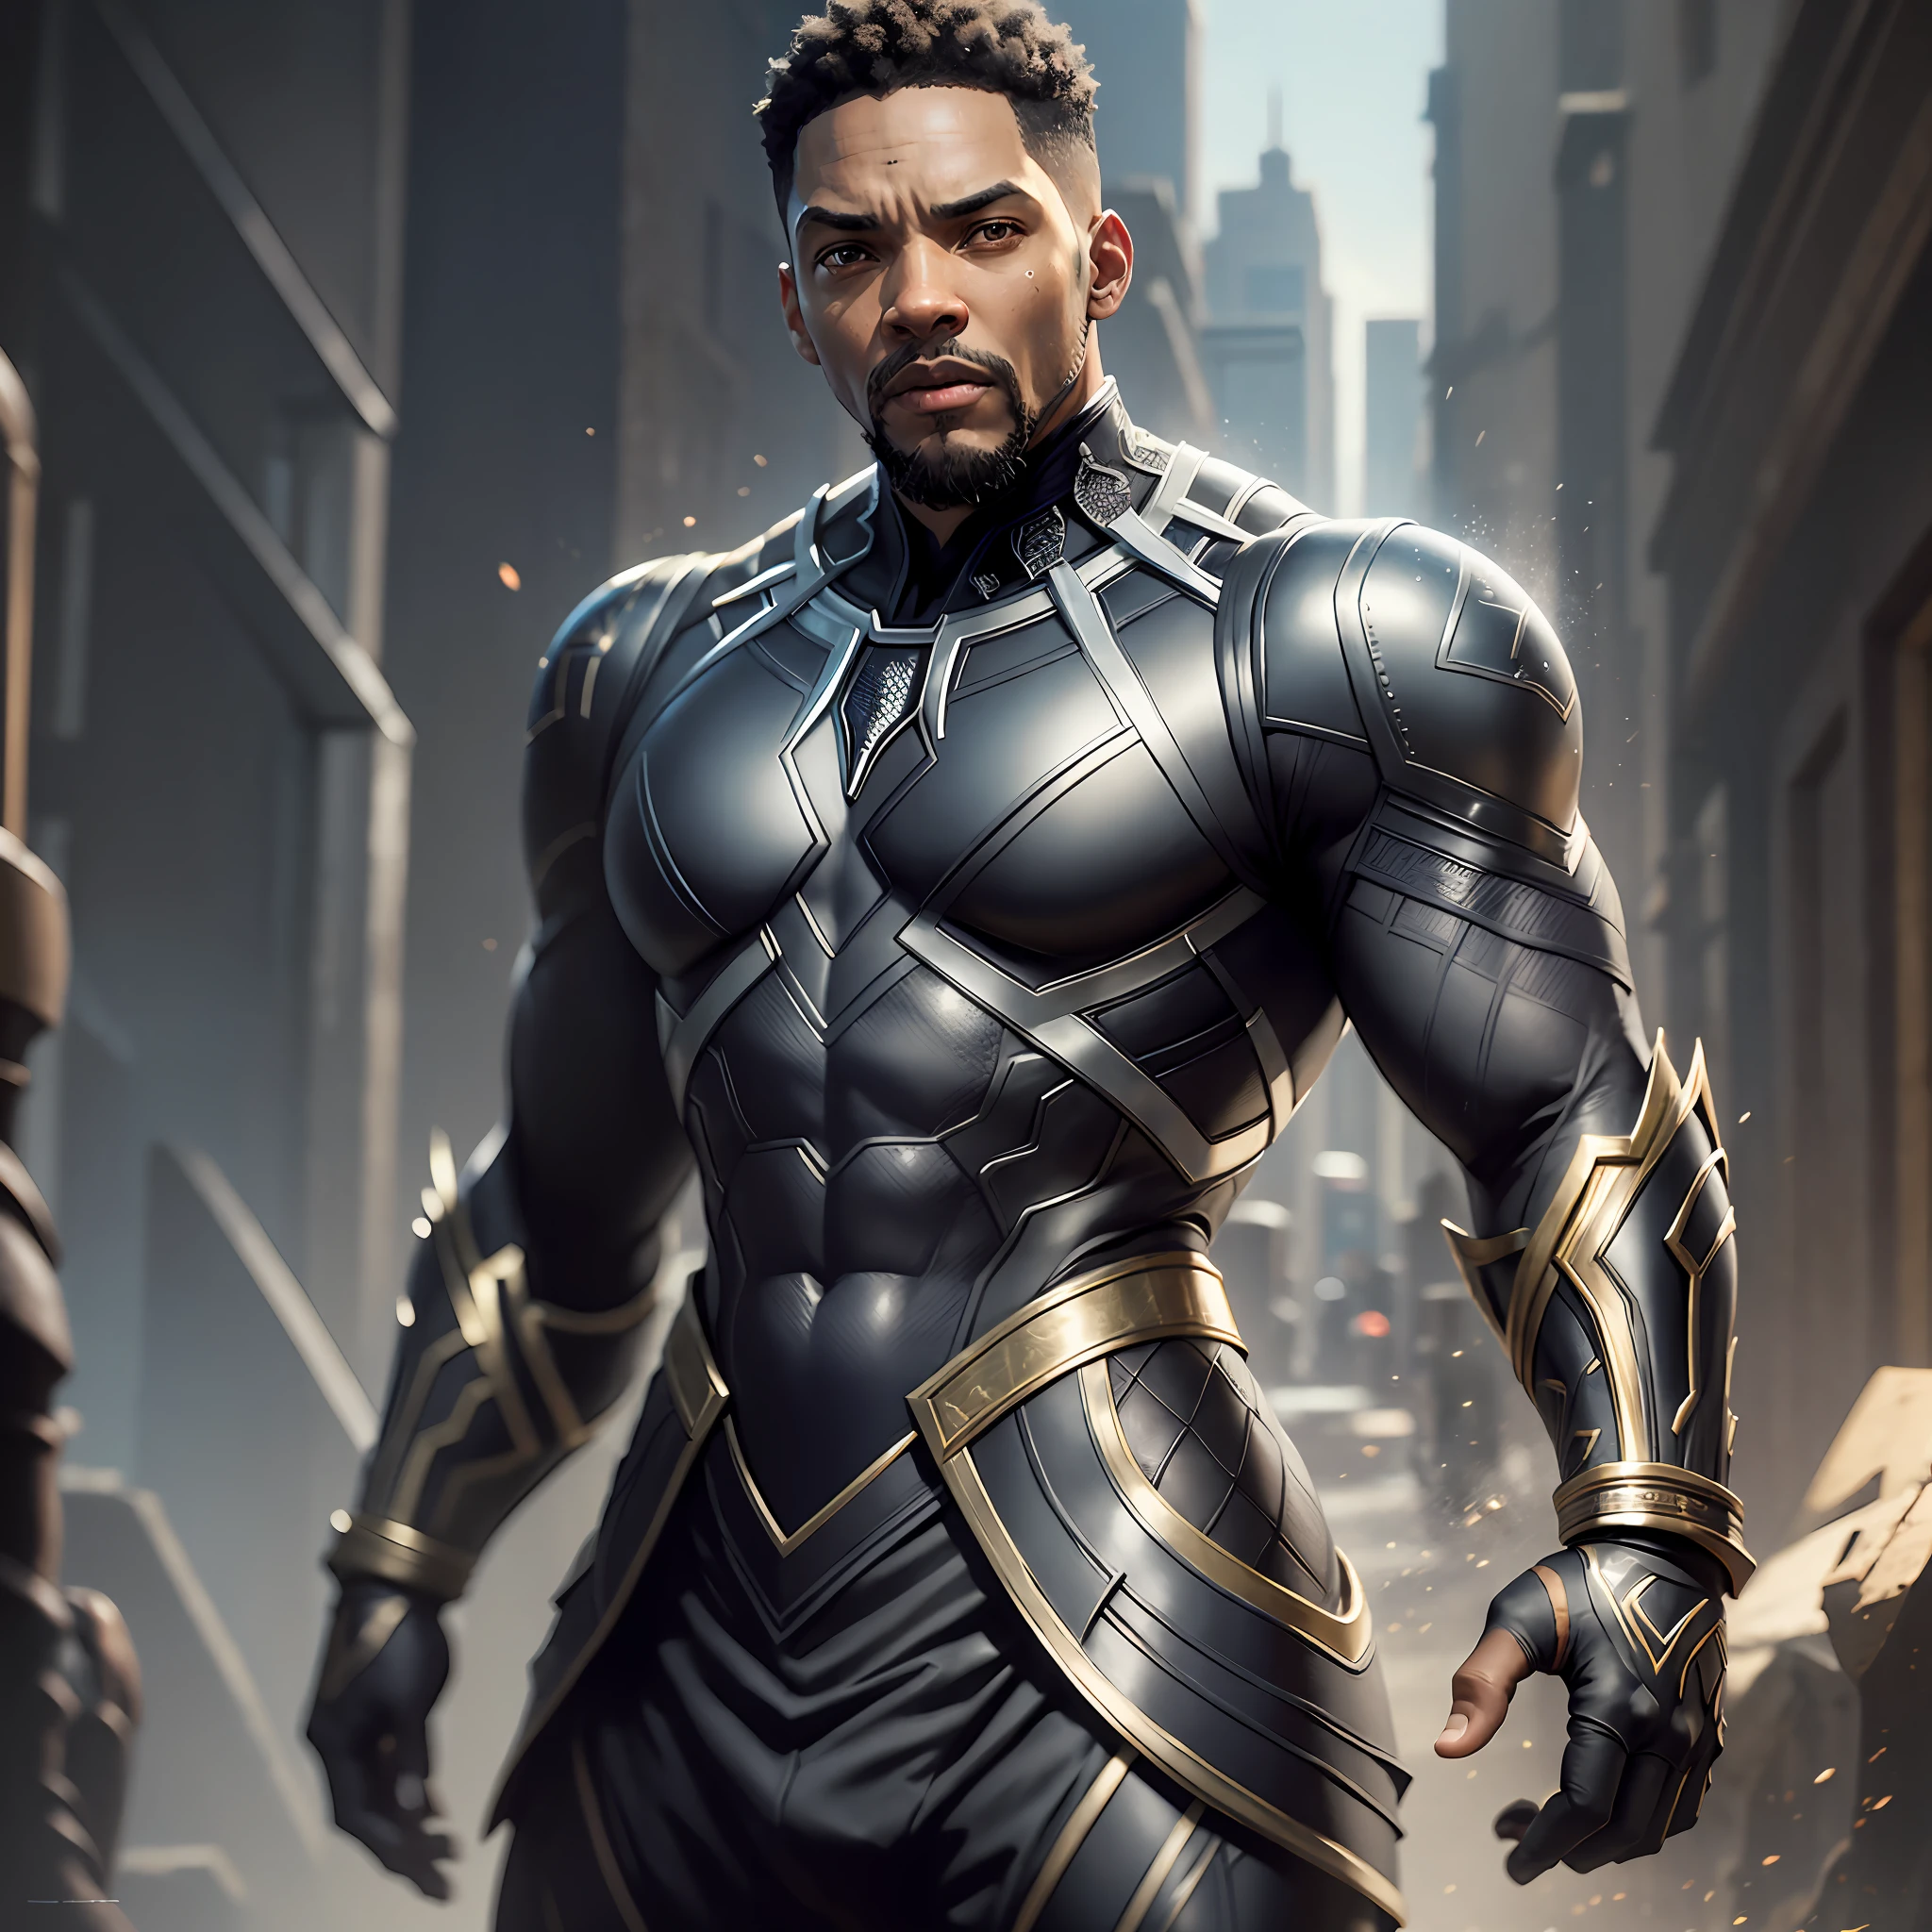 Black Panther - สีดำ man, วิจิตรศิลป์, ภาพหน้าจอภาพยนตร์ของ PS5, ด้วยใบหน้าของวิล สมิธ, ทำ wankada - ผู้ชาย, สีดำ, การเรนเดอร์ภาพยนตร์ที่มีรายละเอียด, การฉายรังสีที่สมจริงเป็นพิเศษ, พร้อมระบบไฟแบบภาพยนตร์ --อัตโนมัติ --s2